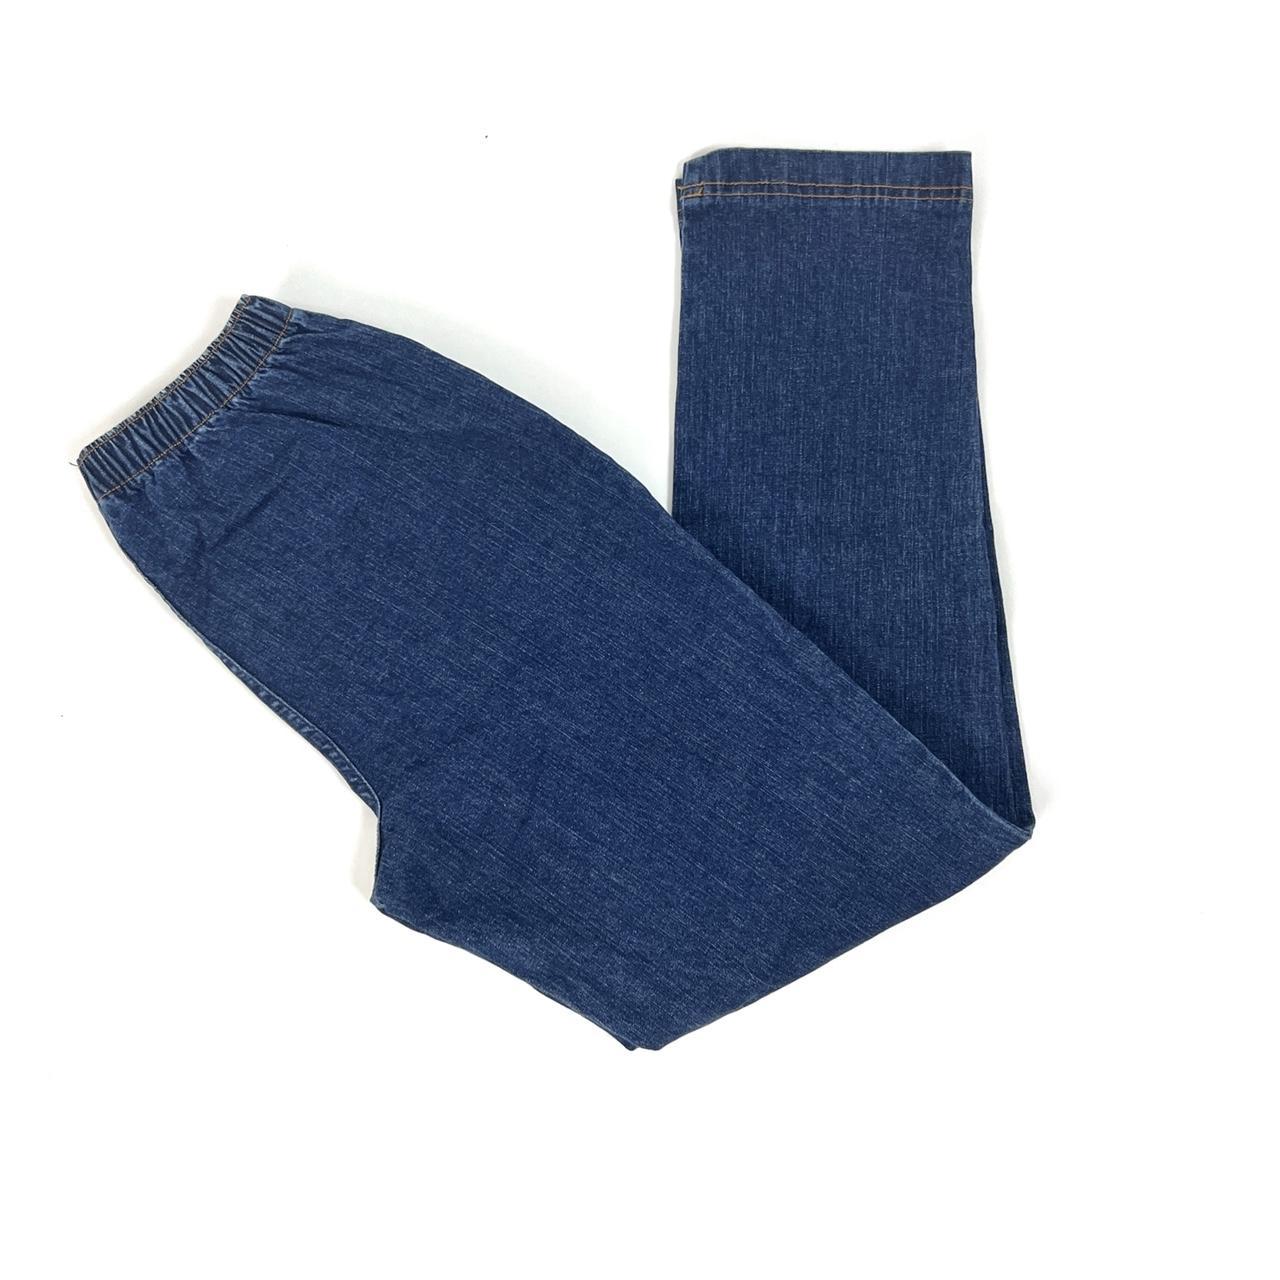 Croft & Barrow vintage stretch jeans 13.5 waist... - Depop